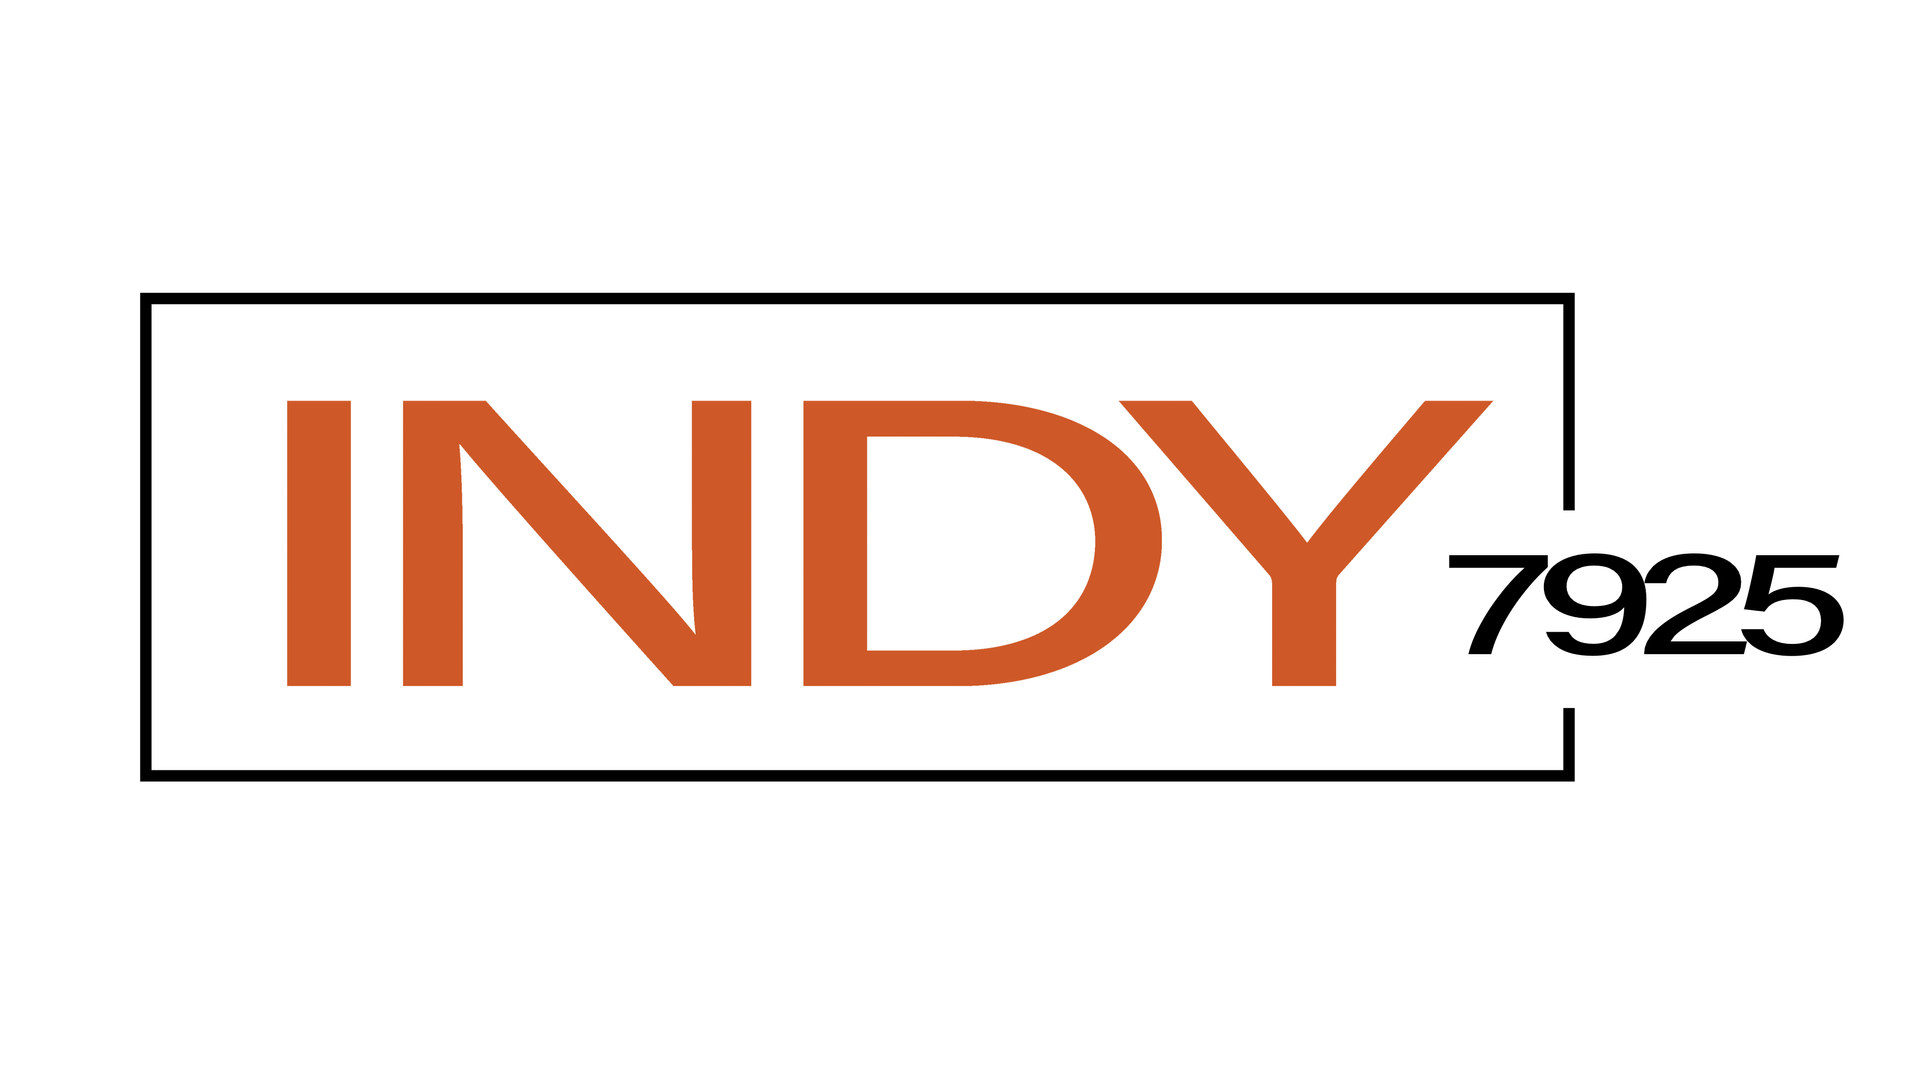 Indy7925 logo.